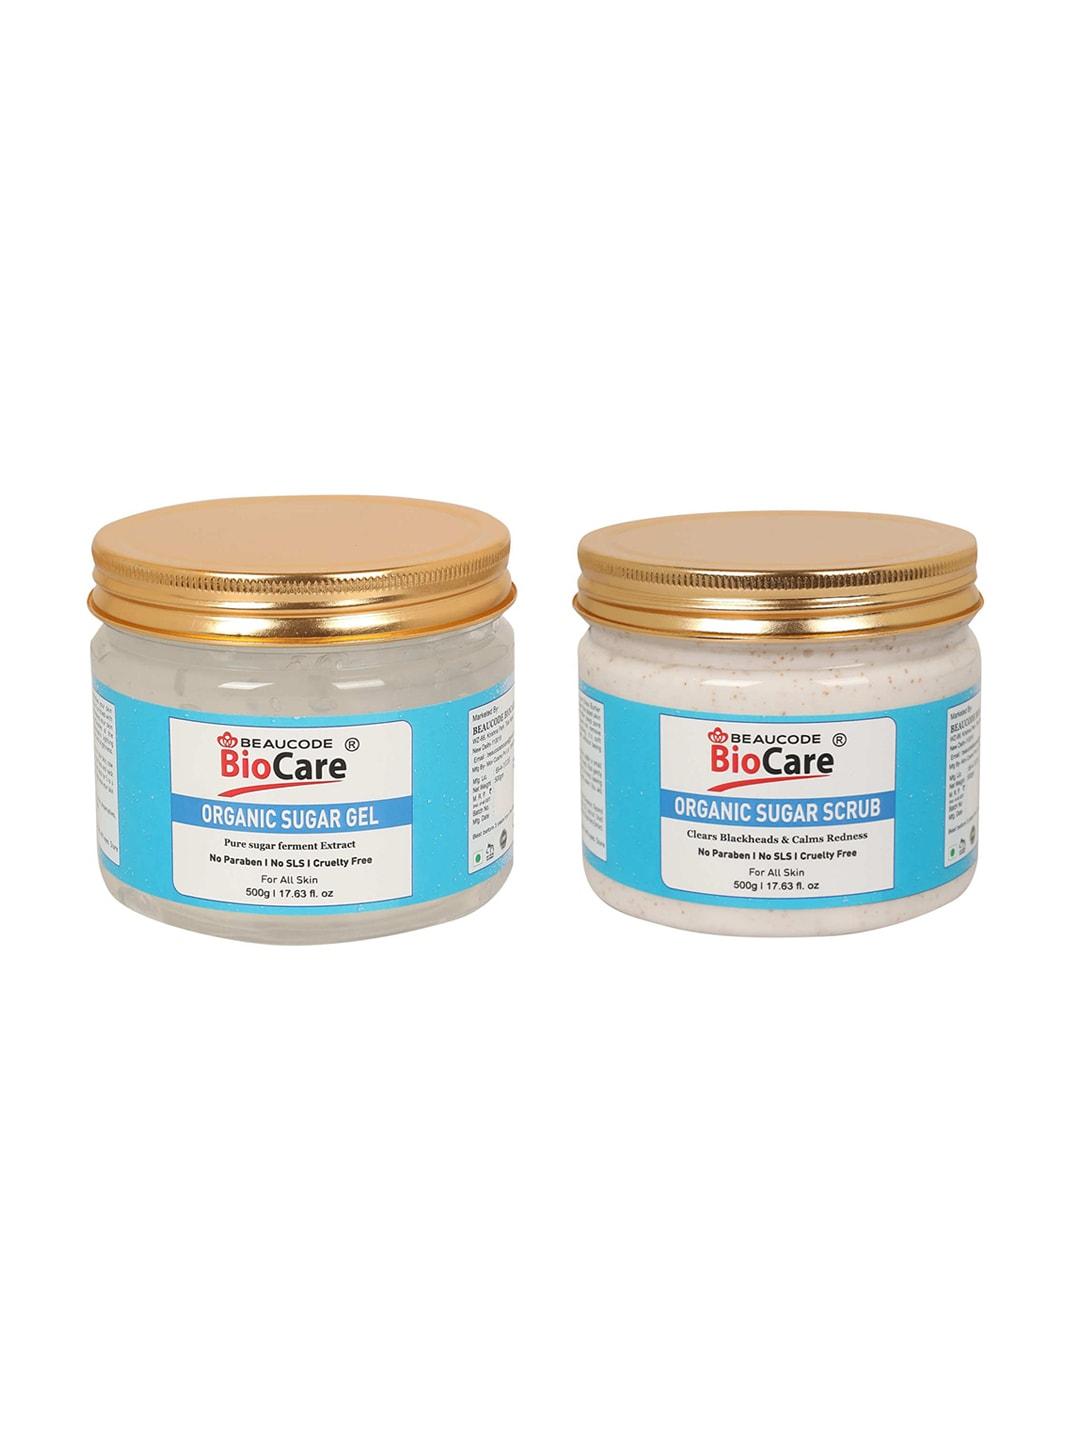 beaucode-biocare-white-set-of-2-organic-sugar-gel-&-scrub---500-g-each